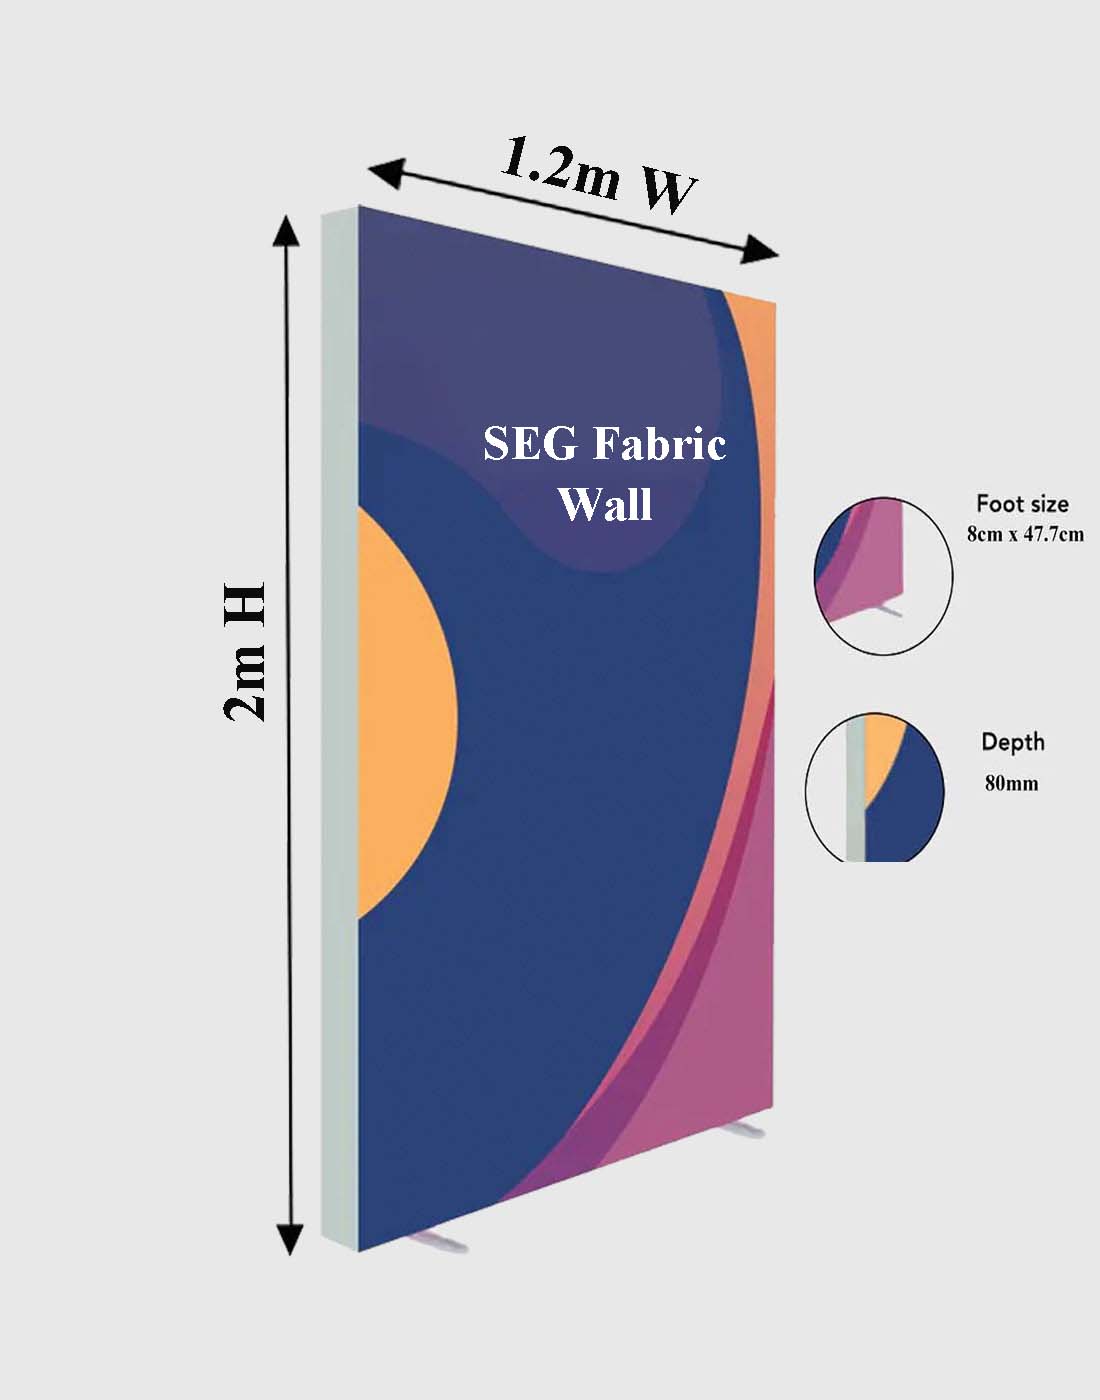 SEG Fabric Media Wall - 1.2m x 2m